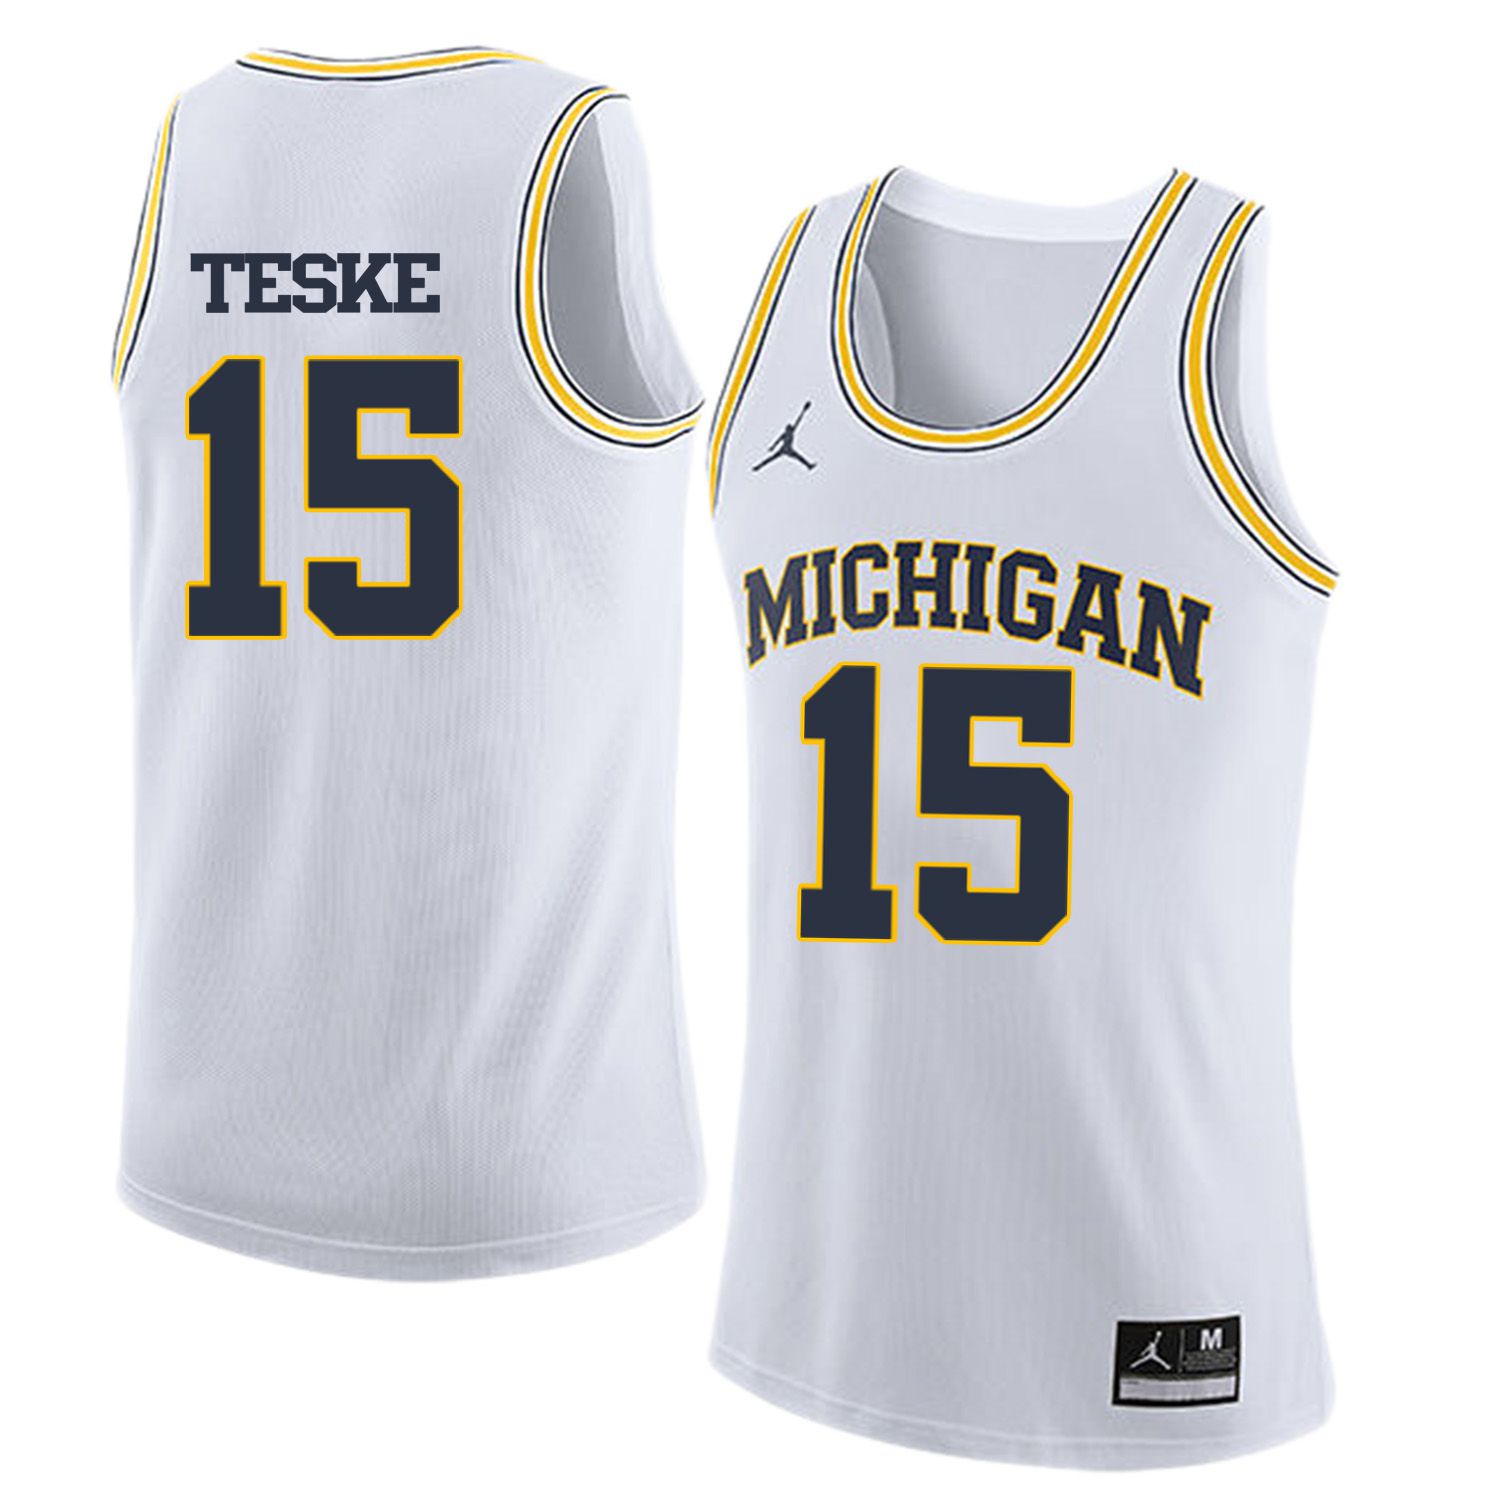 Men Jordan University of Michigan Basketball White 15 Teske Customized NCAA Jerseys